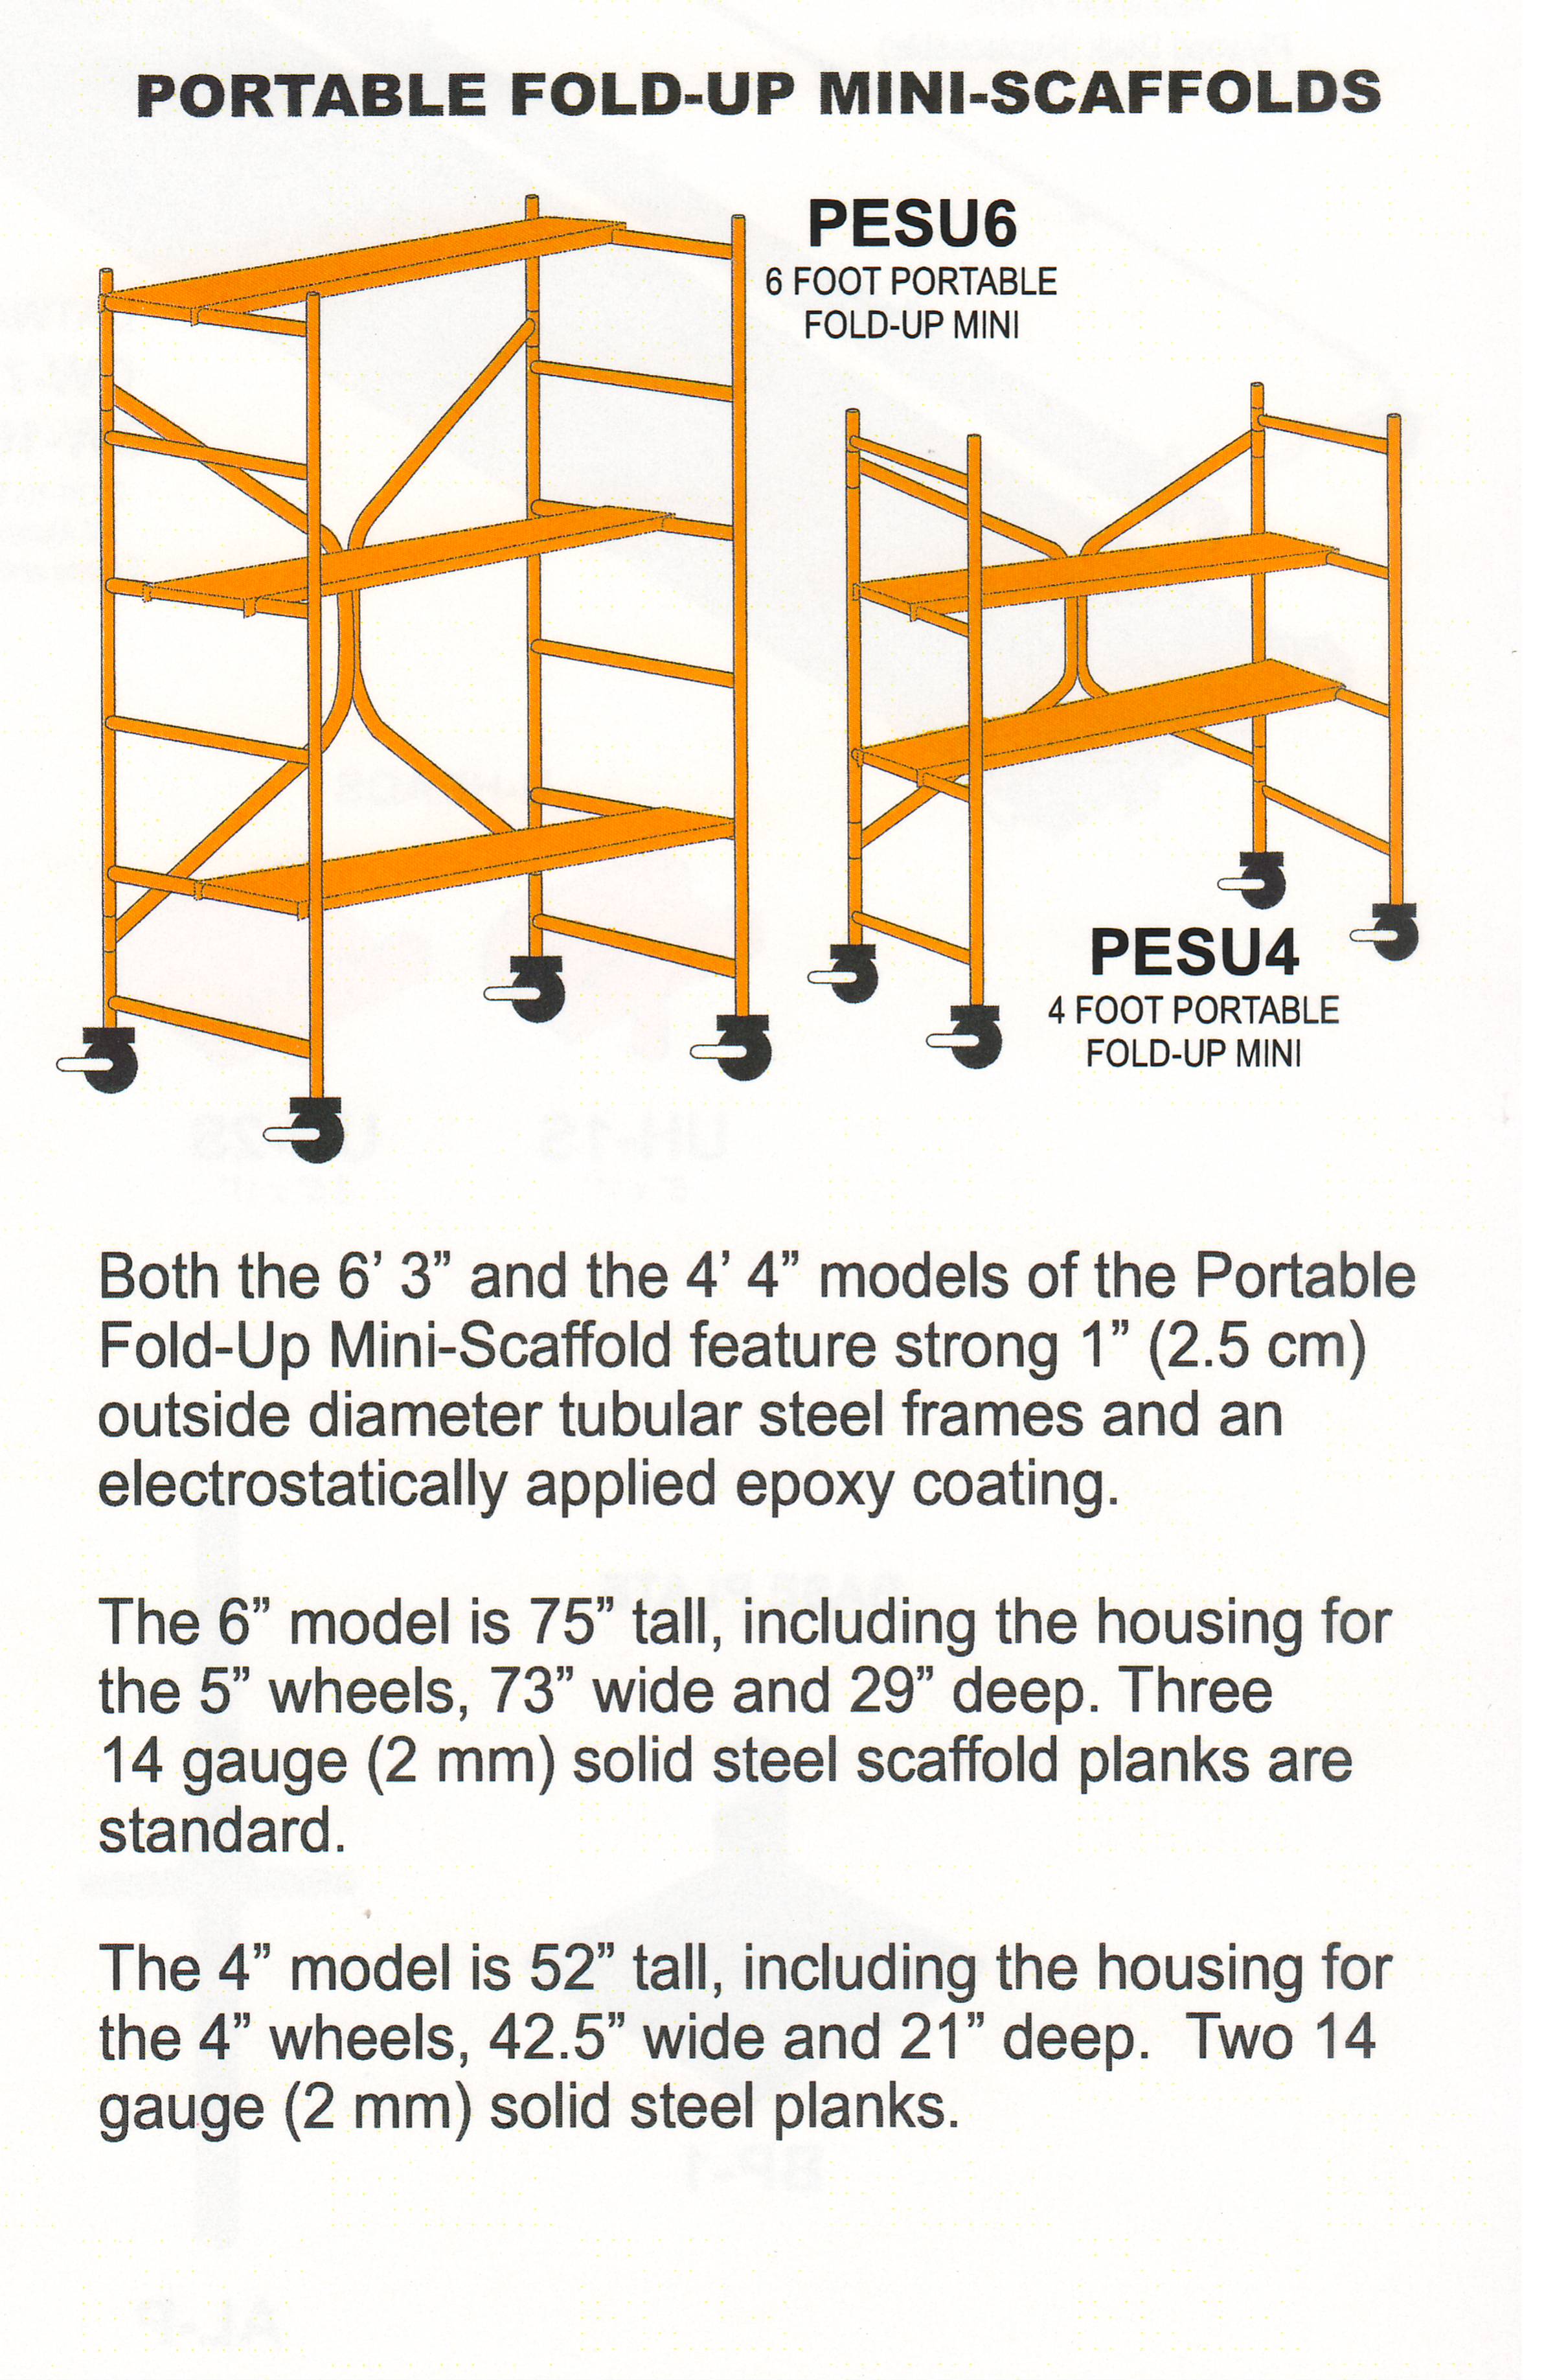 Portable fold up mini-scaffolds